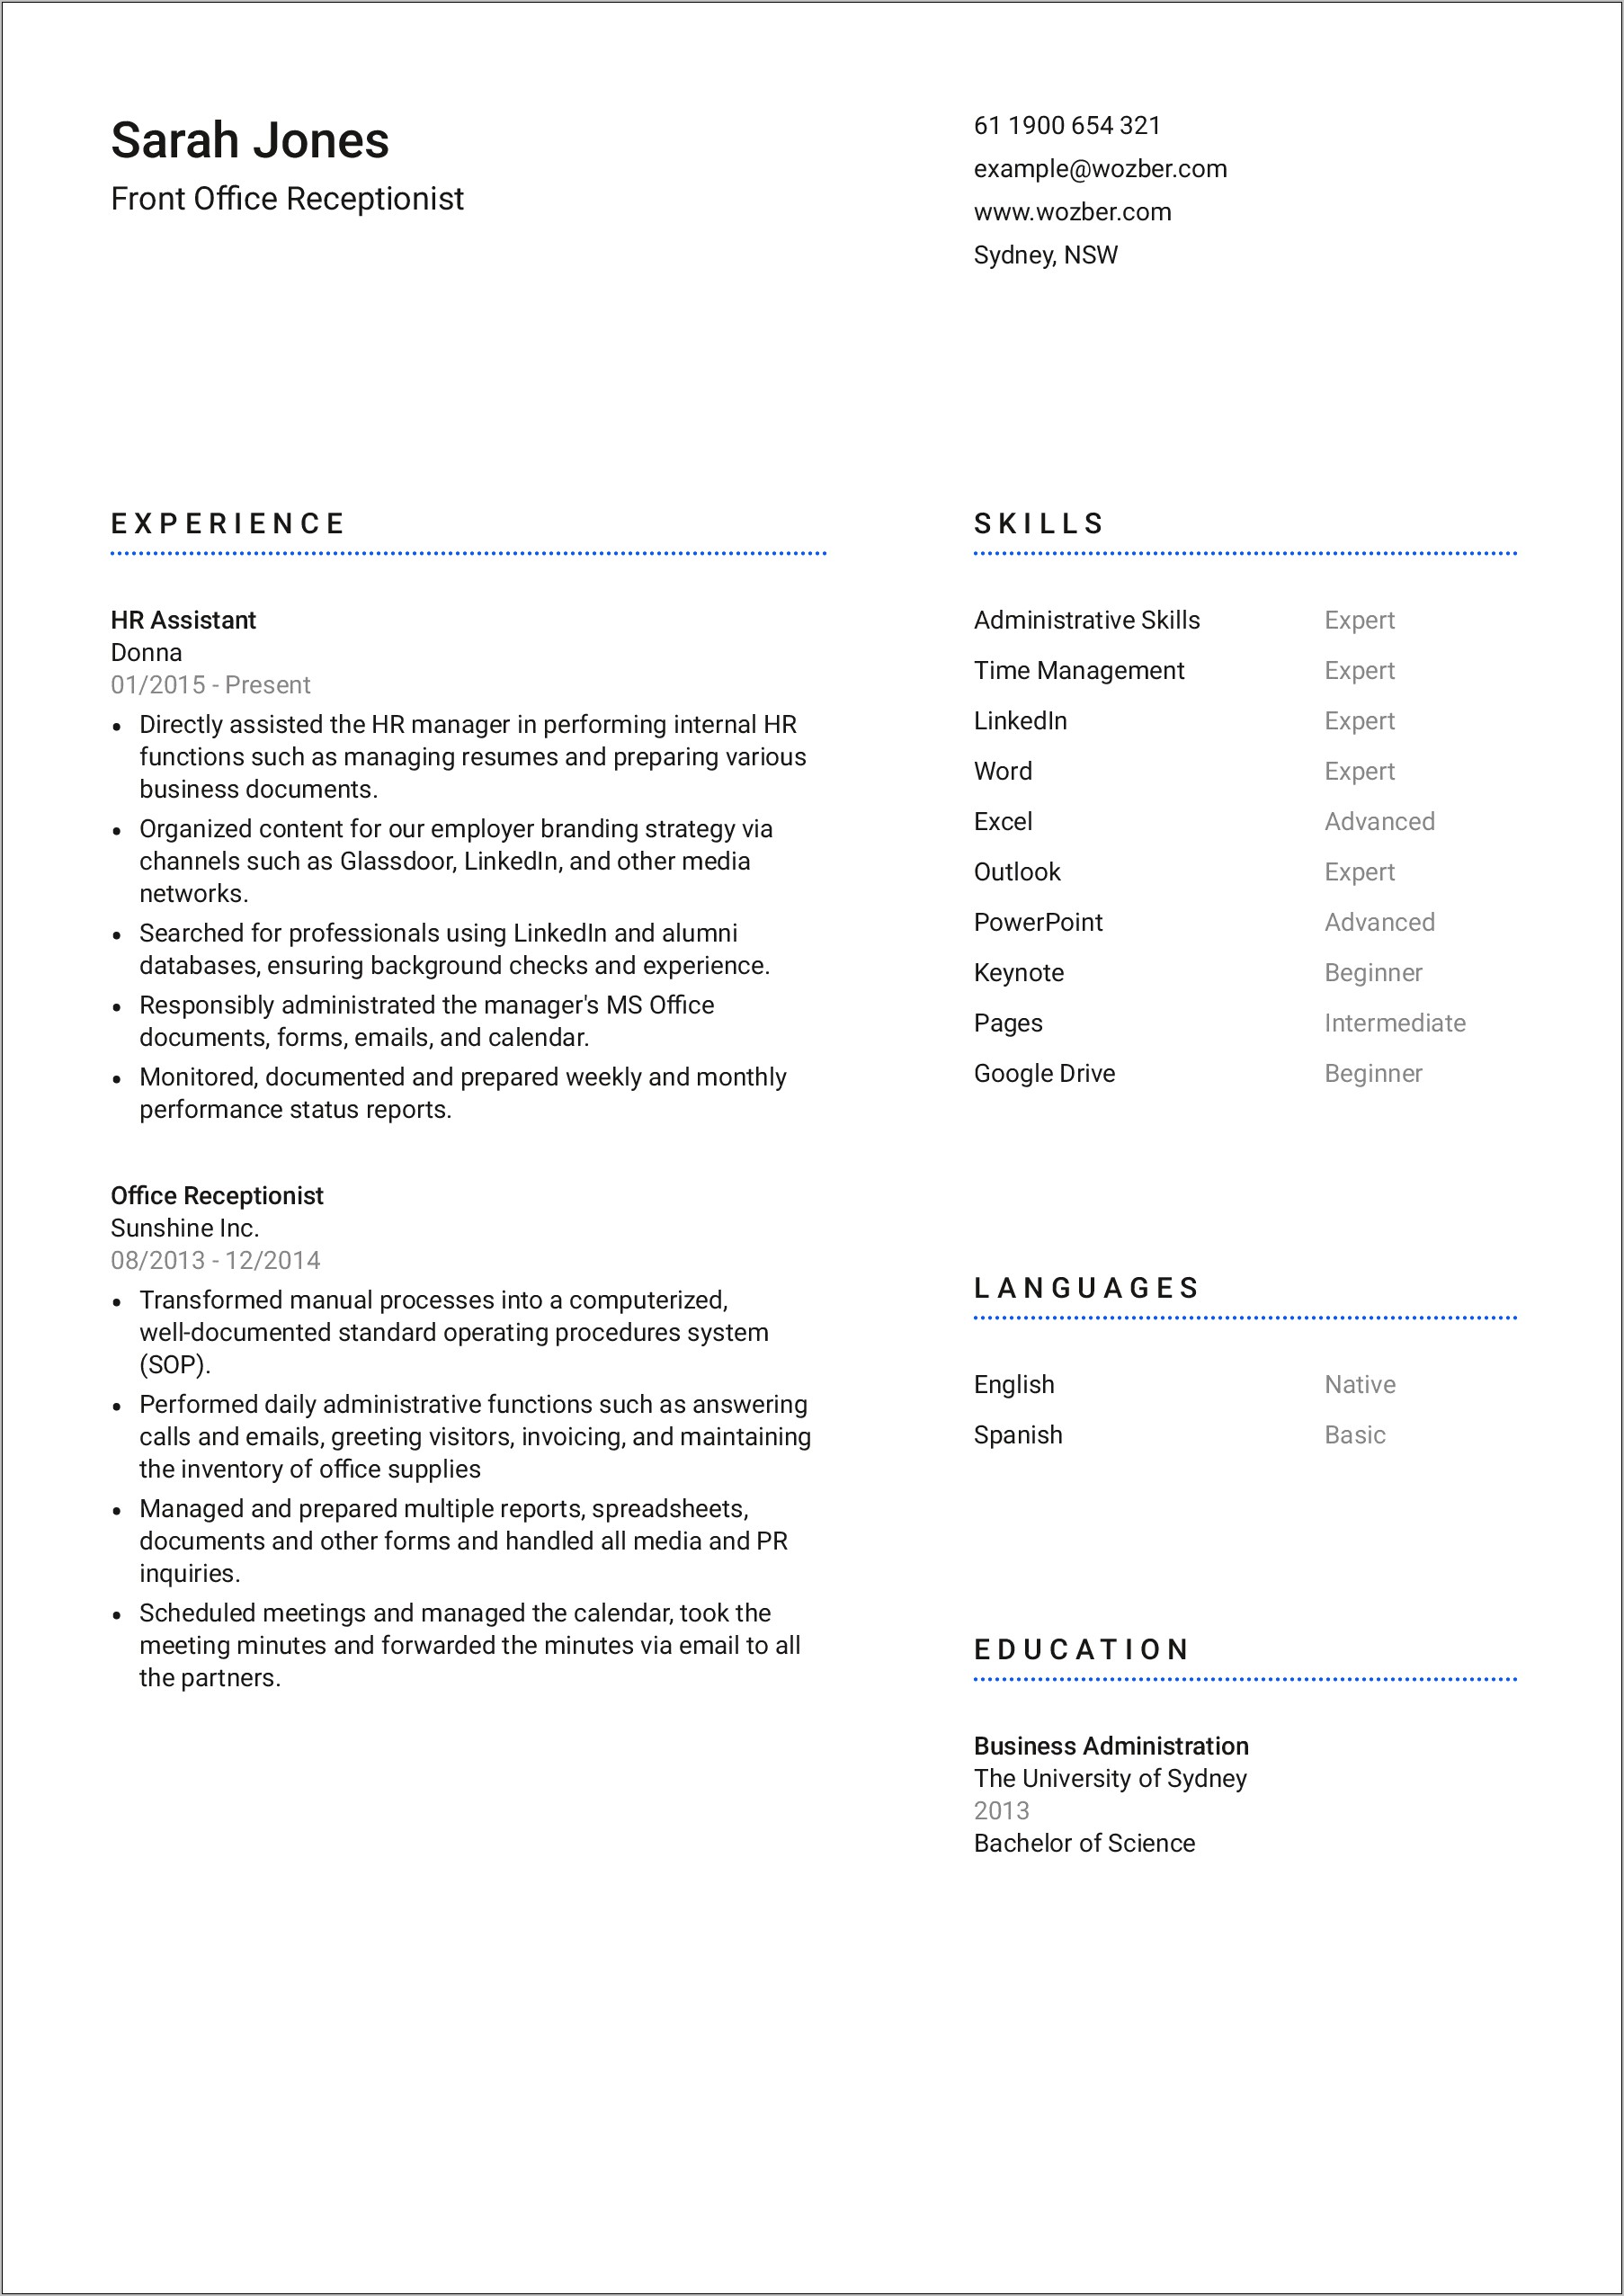 Resume Job Description For Hr